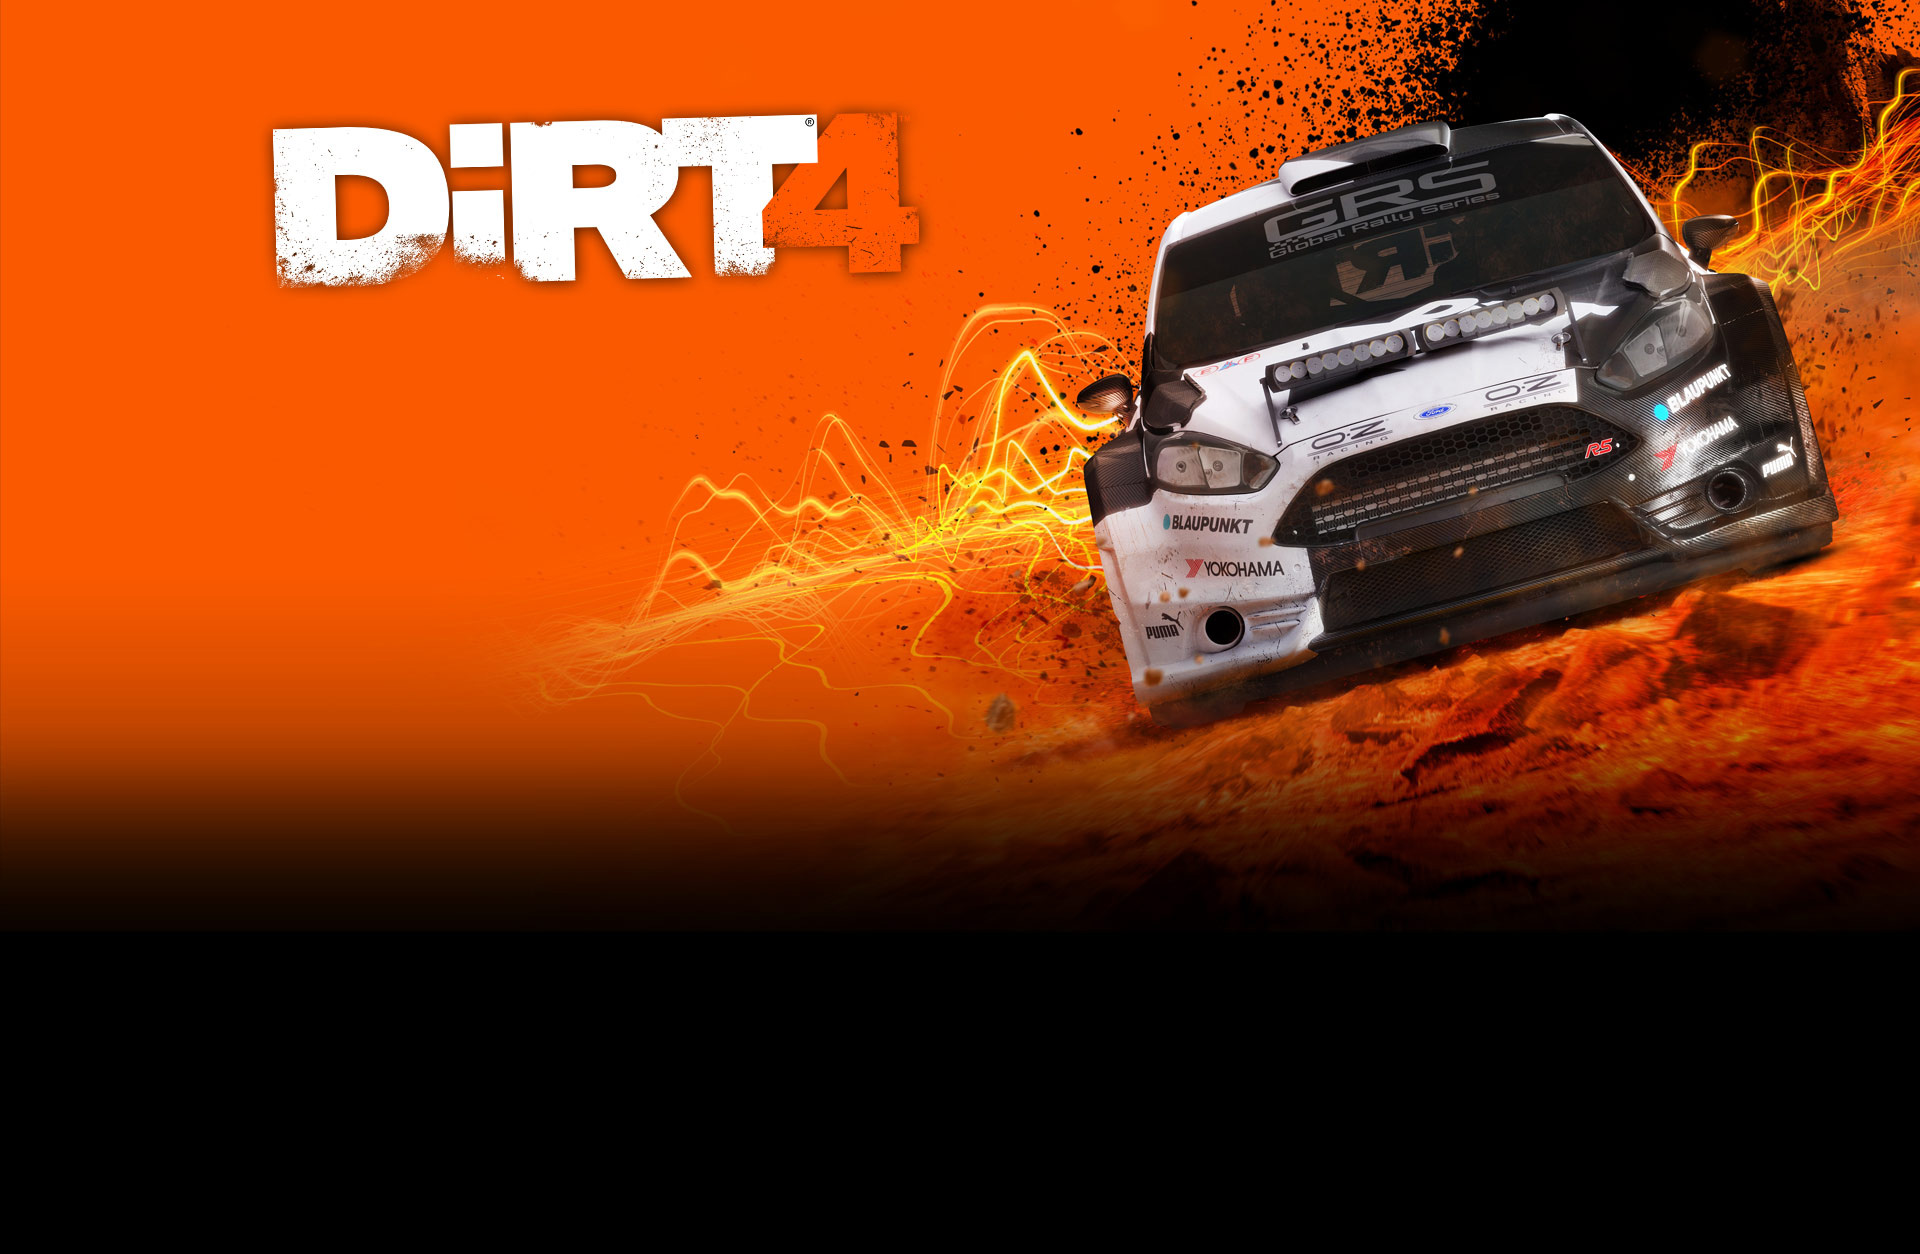 dirt 4 video game